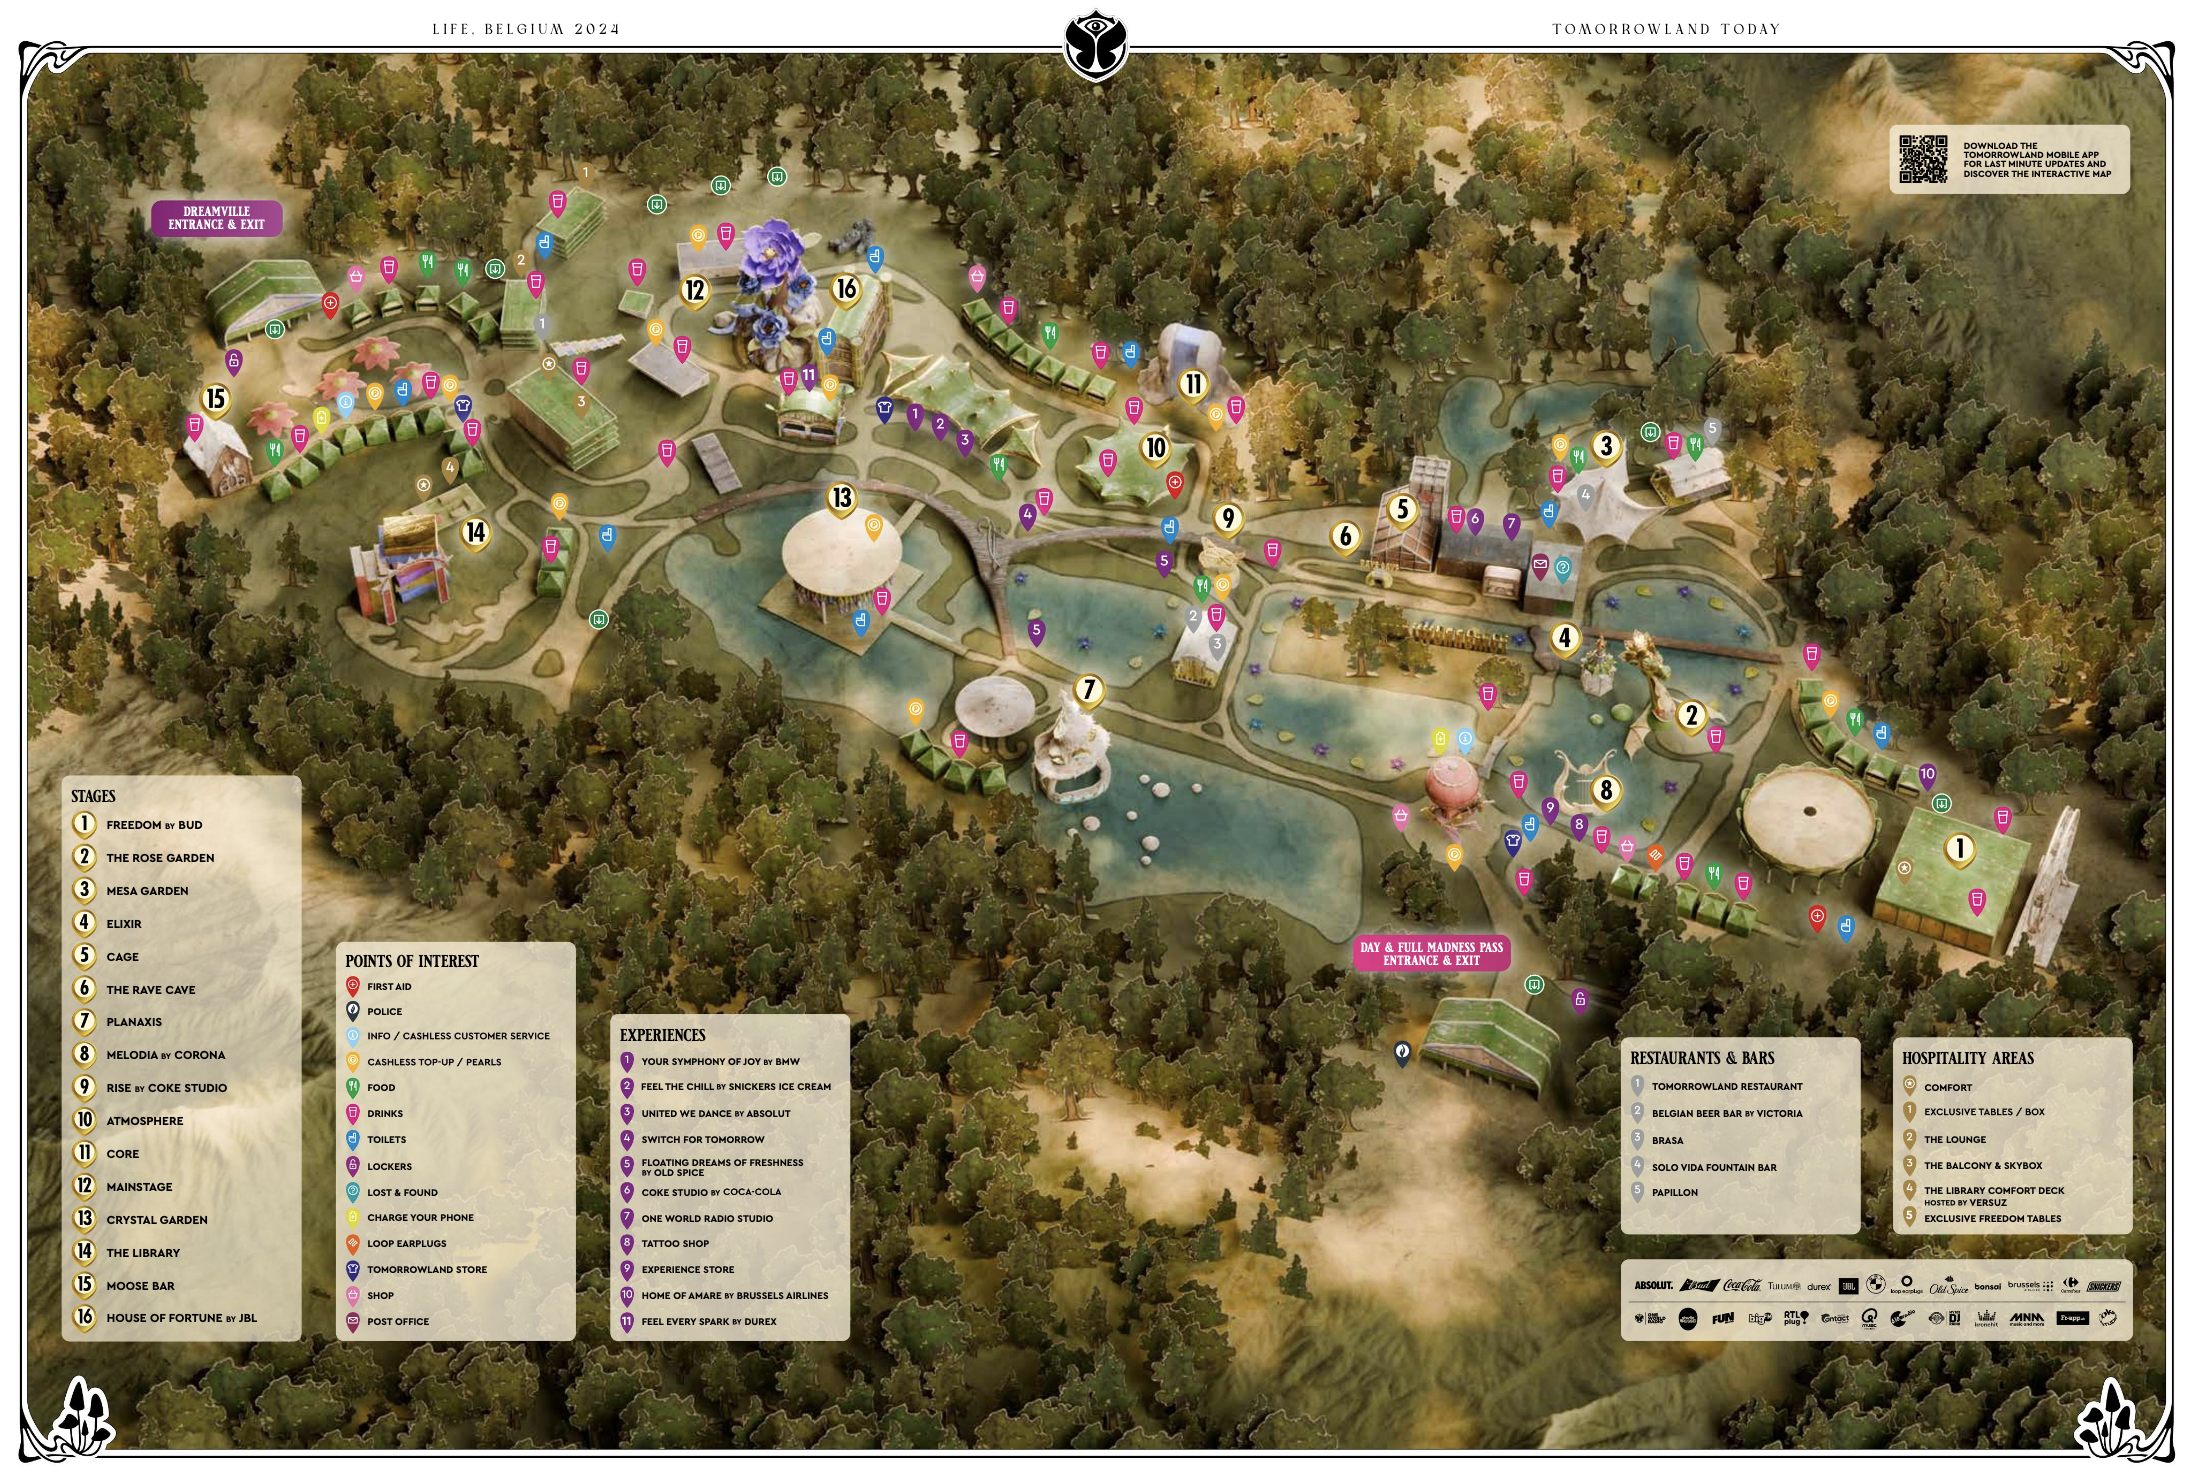 Tomorrowland Map 2024